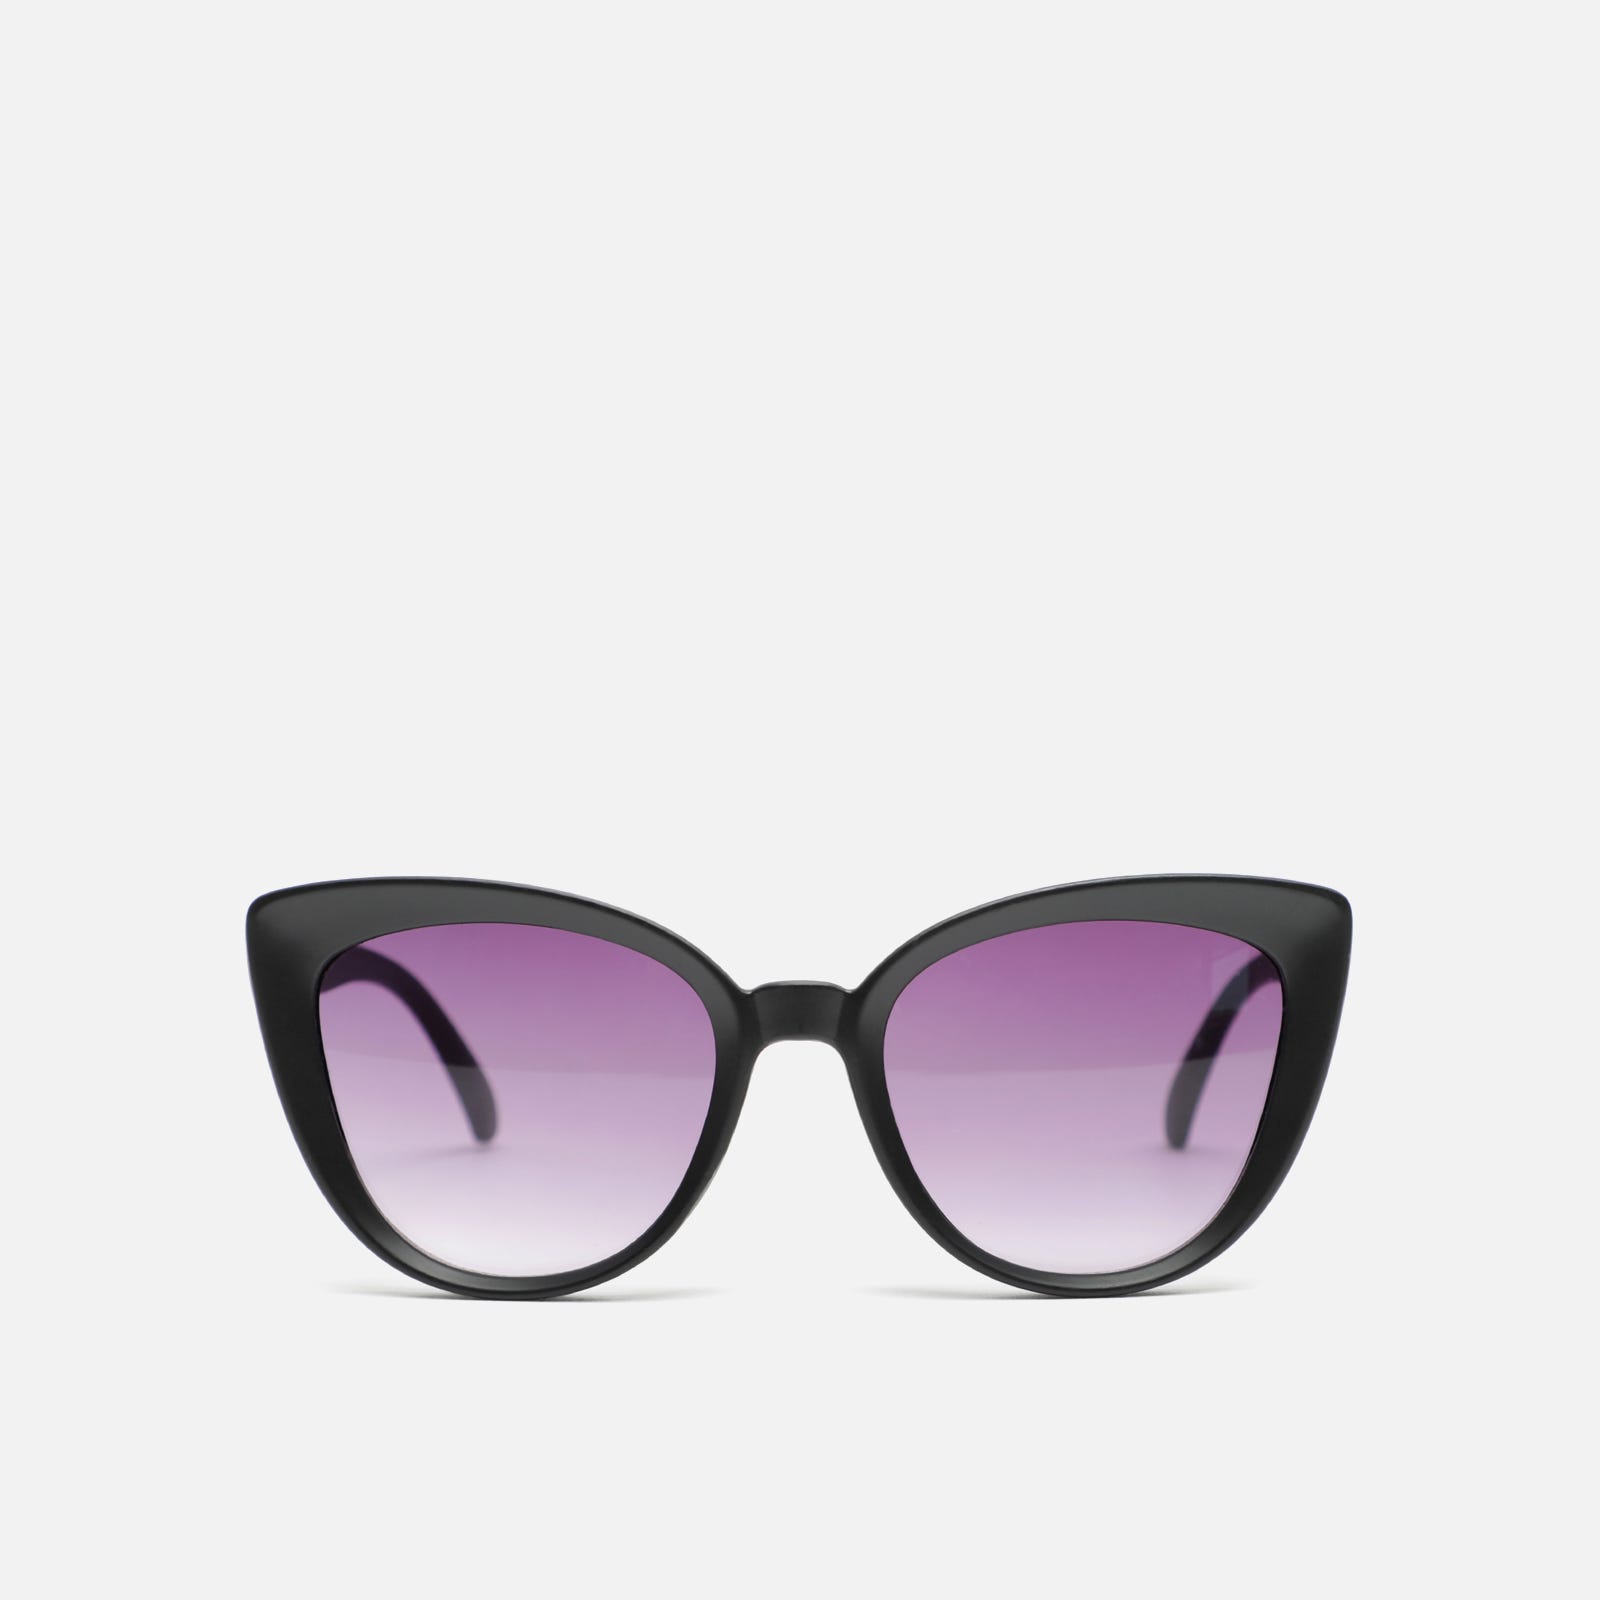 Catai cat-eye sunglasses with acetate frames